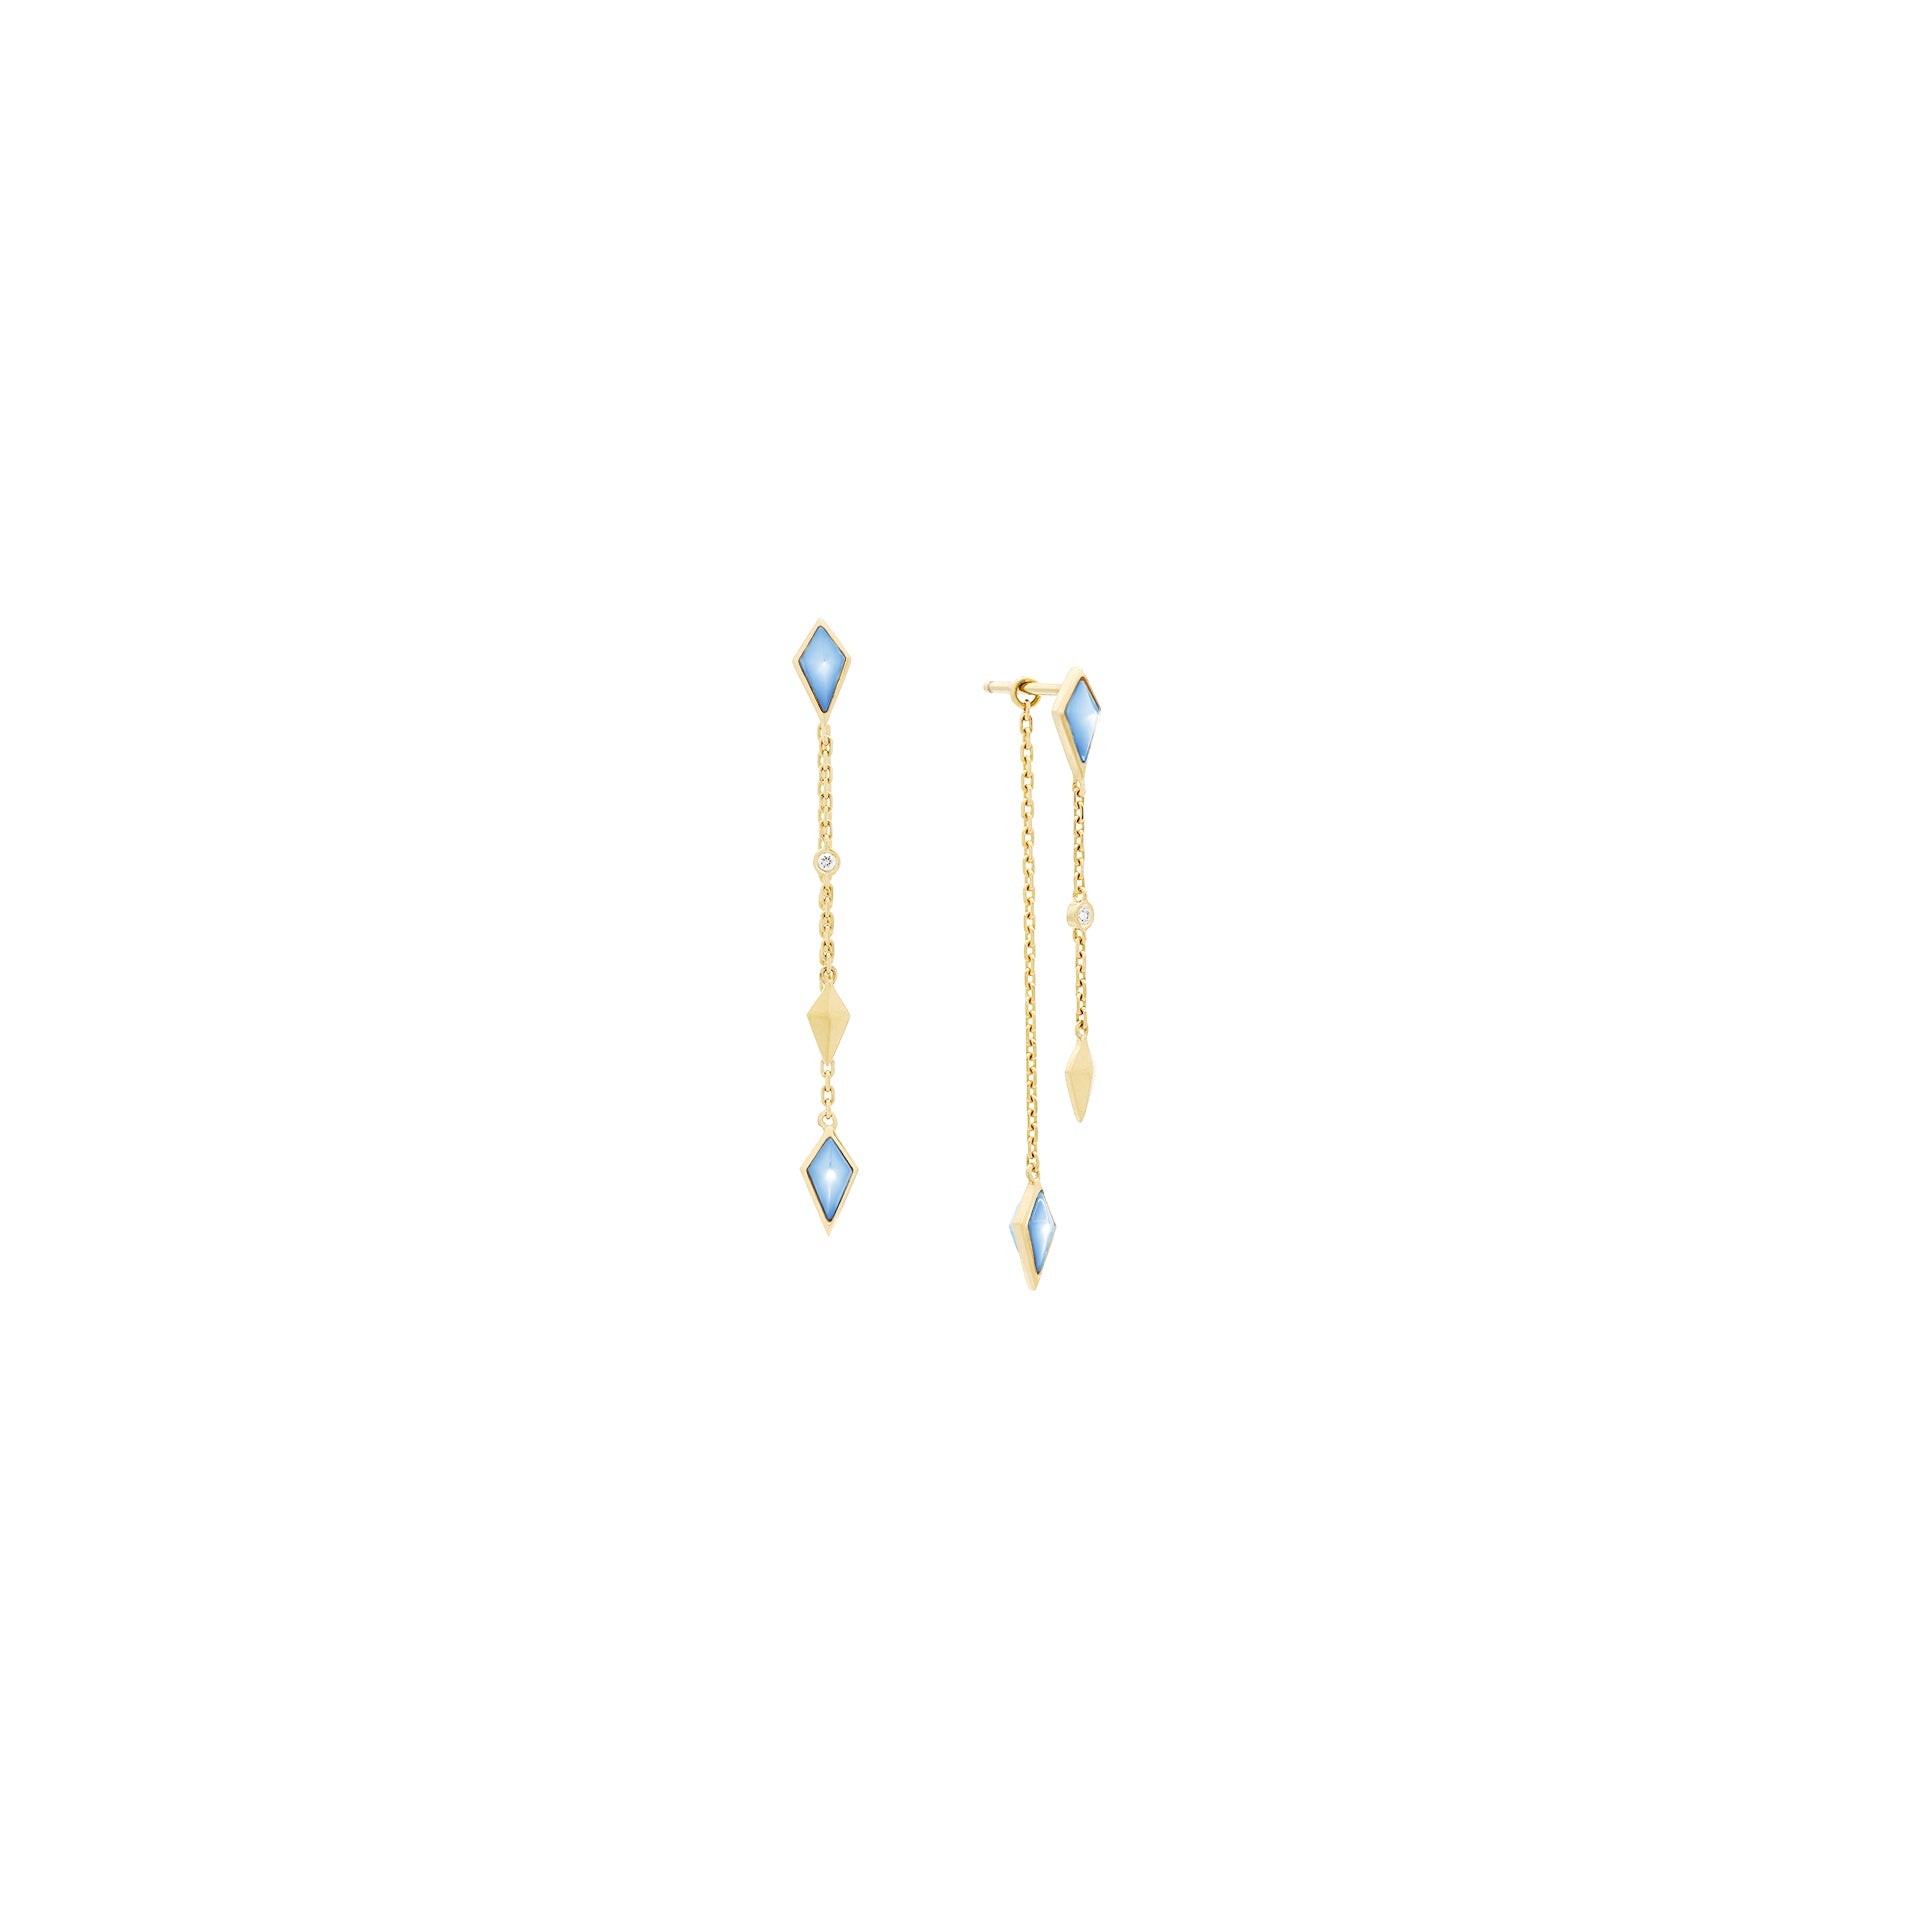 Al Merta’shah Earrings in Diamonds and Blue Agate